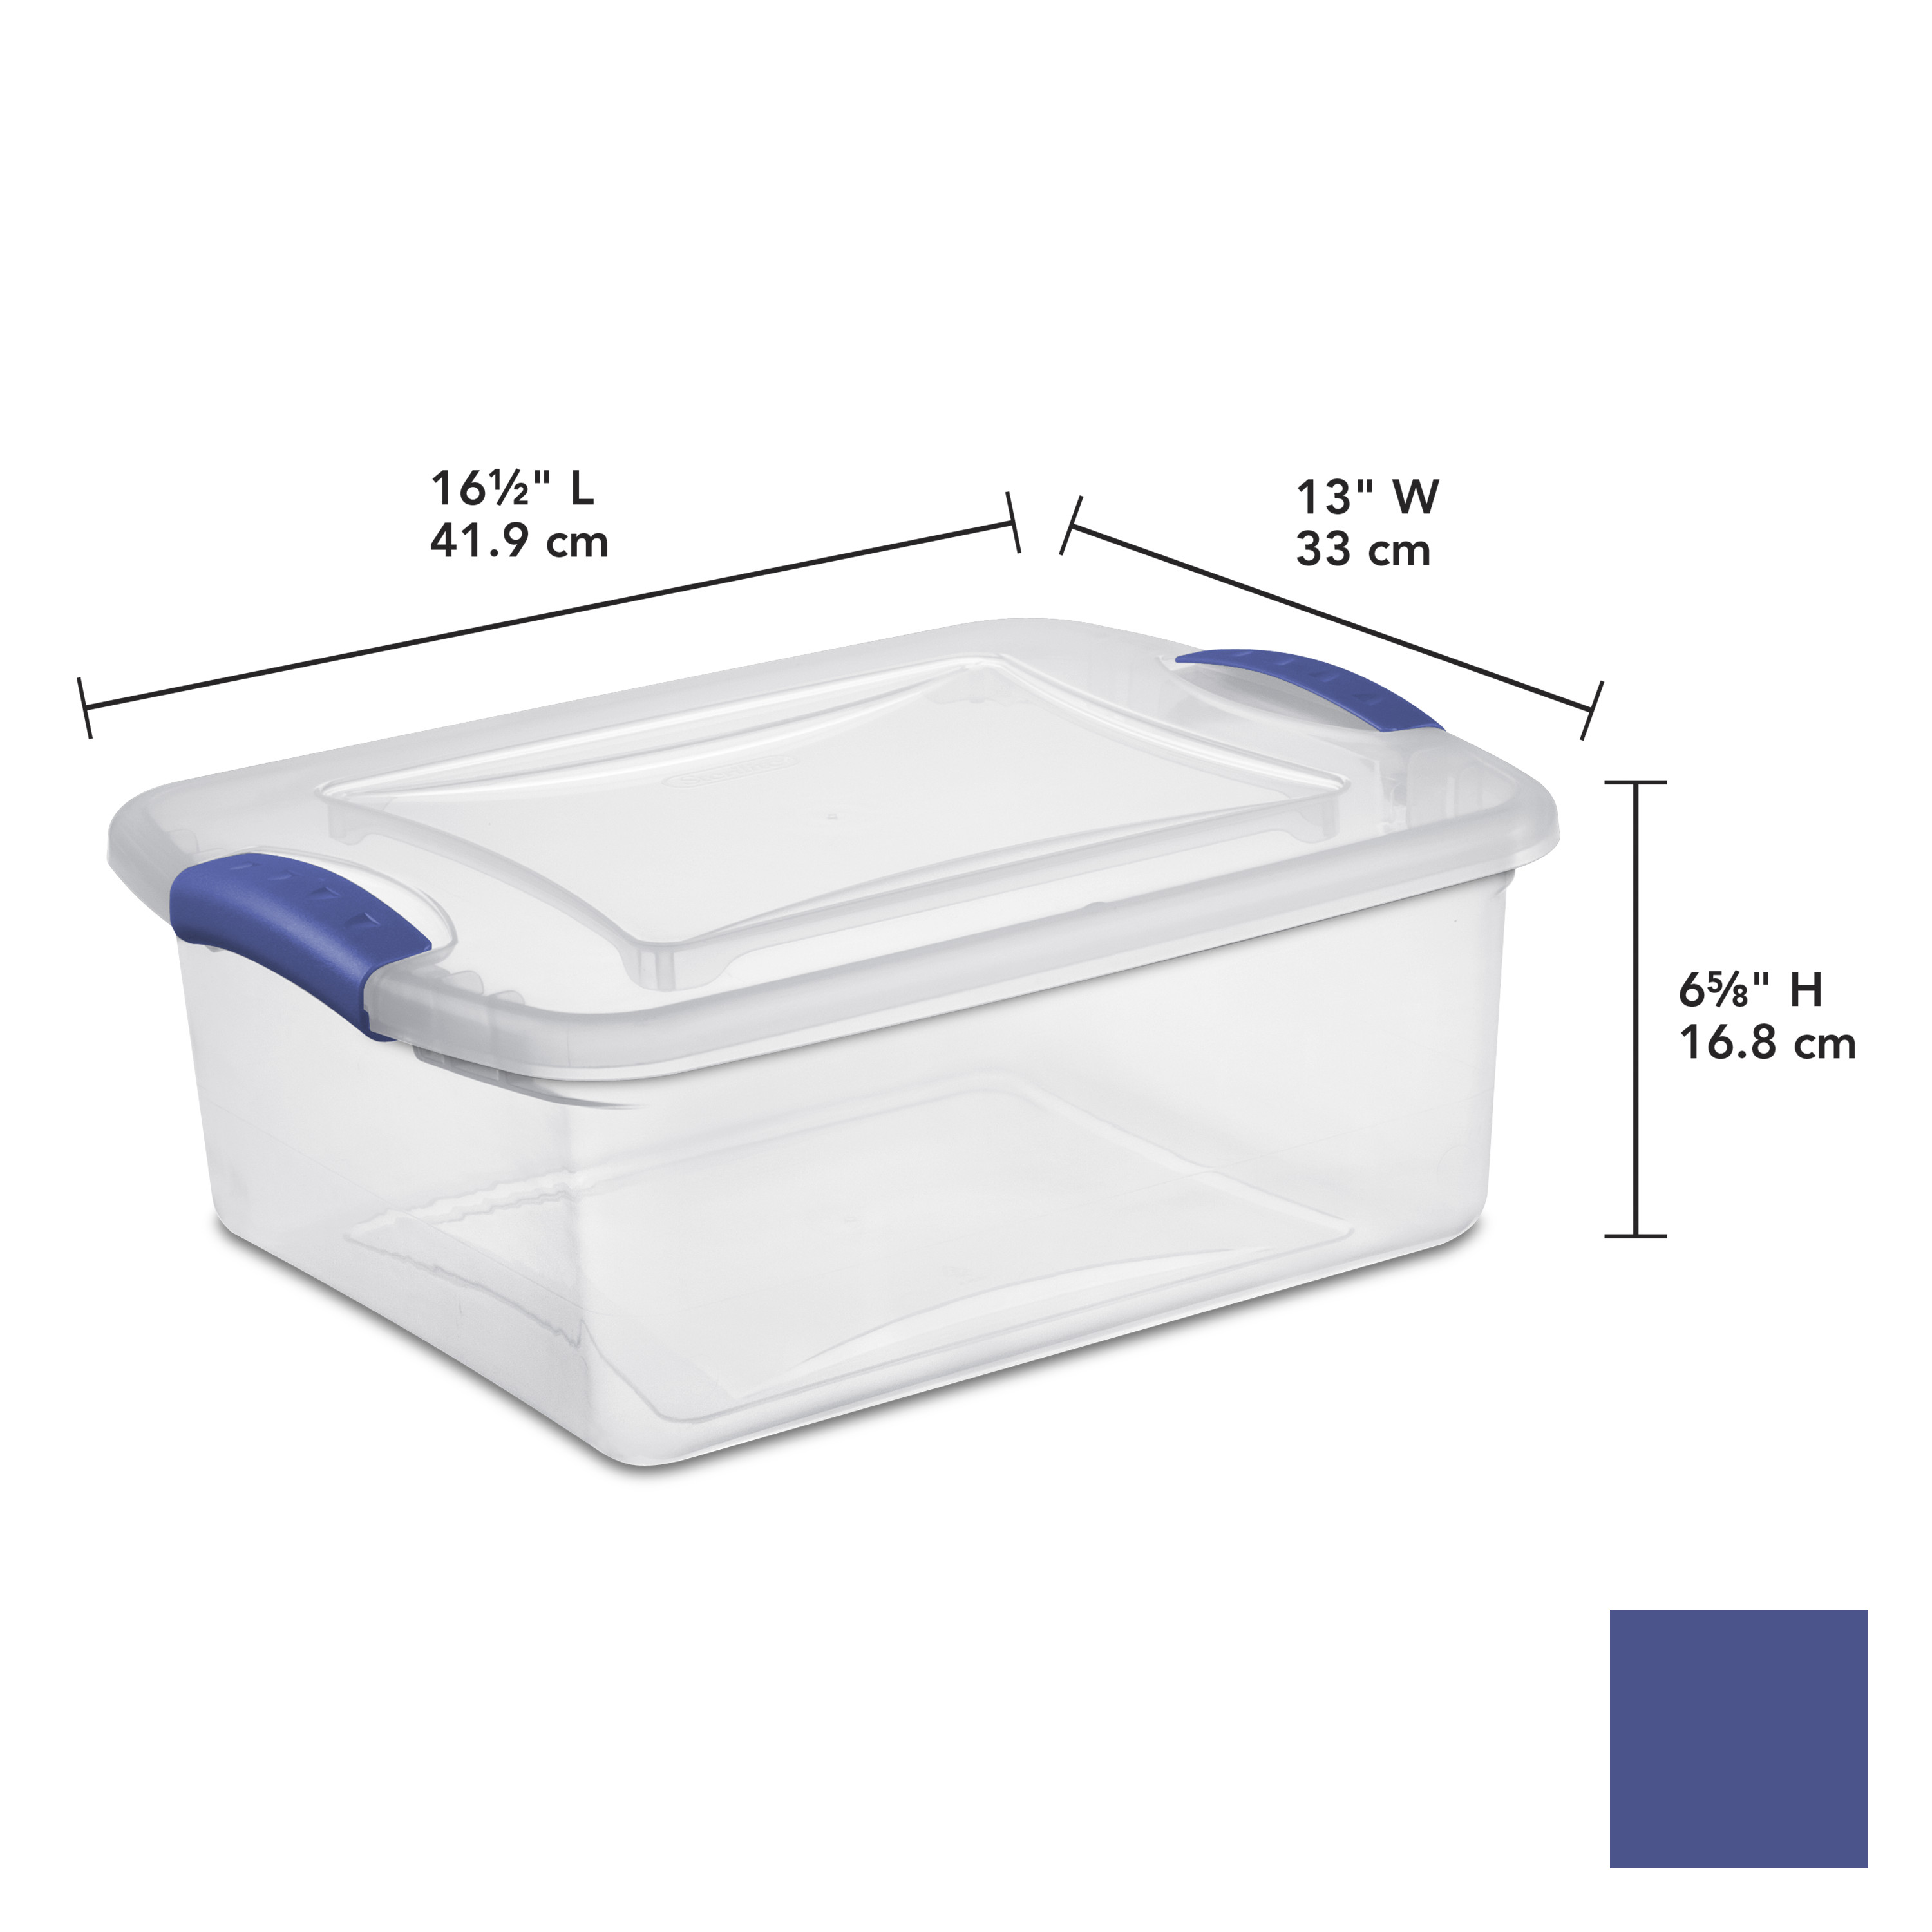 Sterilite 15 Qt Latch Box Clear Base and Lid Blue Set of 10 - image 4 of 7